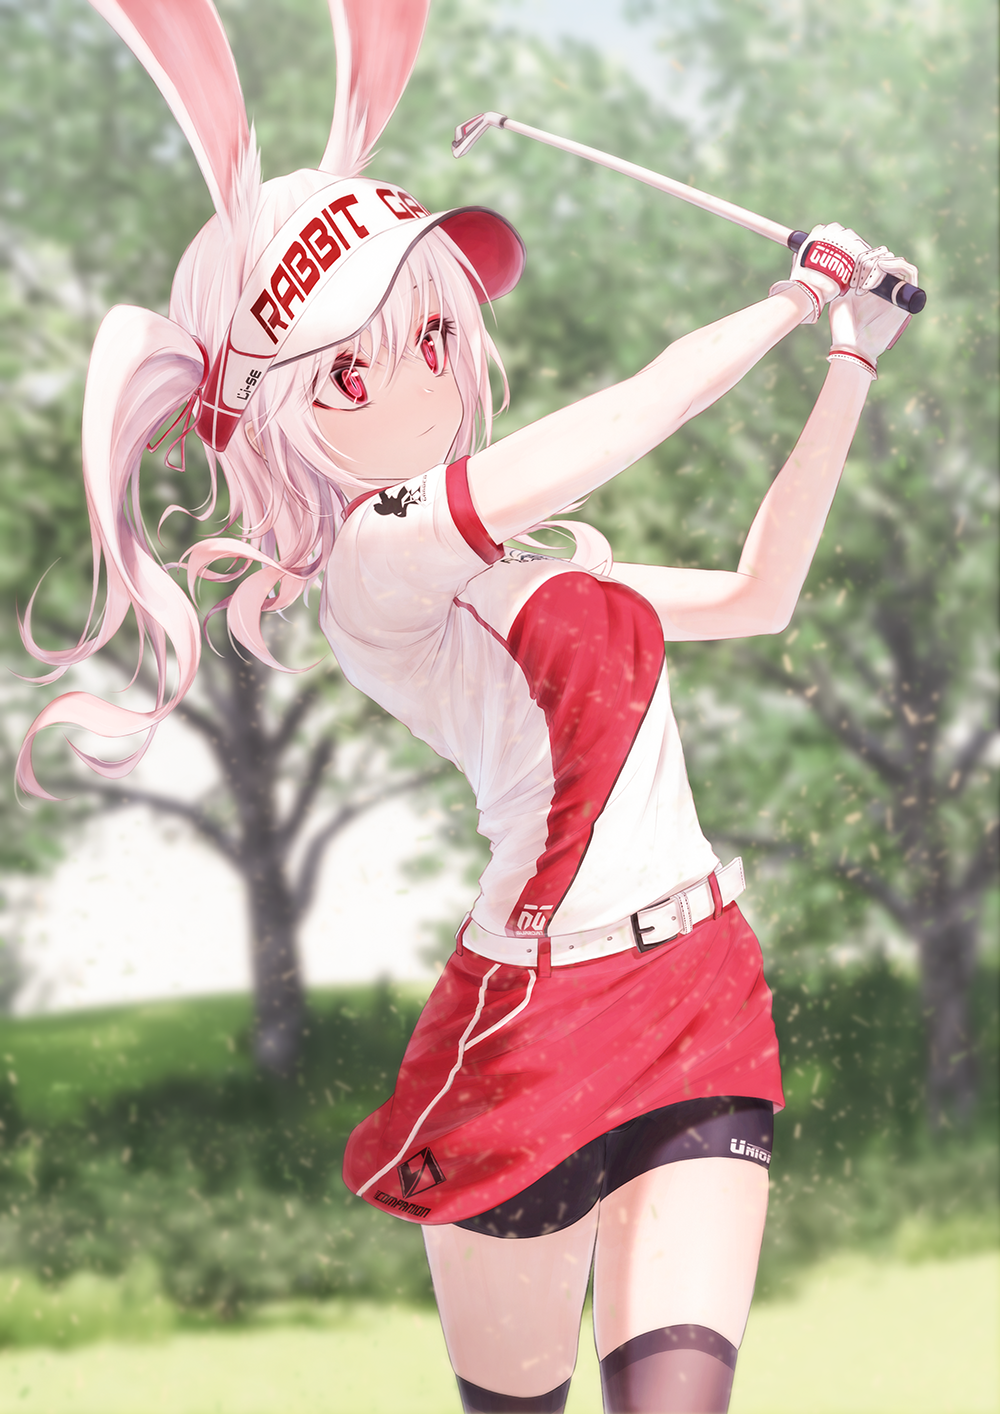 Anime 1000x1414 anime anime girls digital art artwork 2D portrait display Bae.C animal ears pink hair red eyes golf sportswear bunny girl